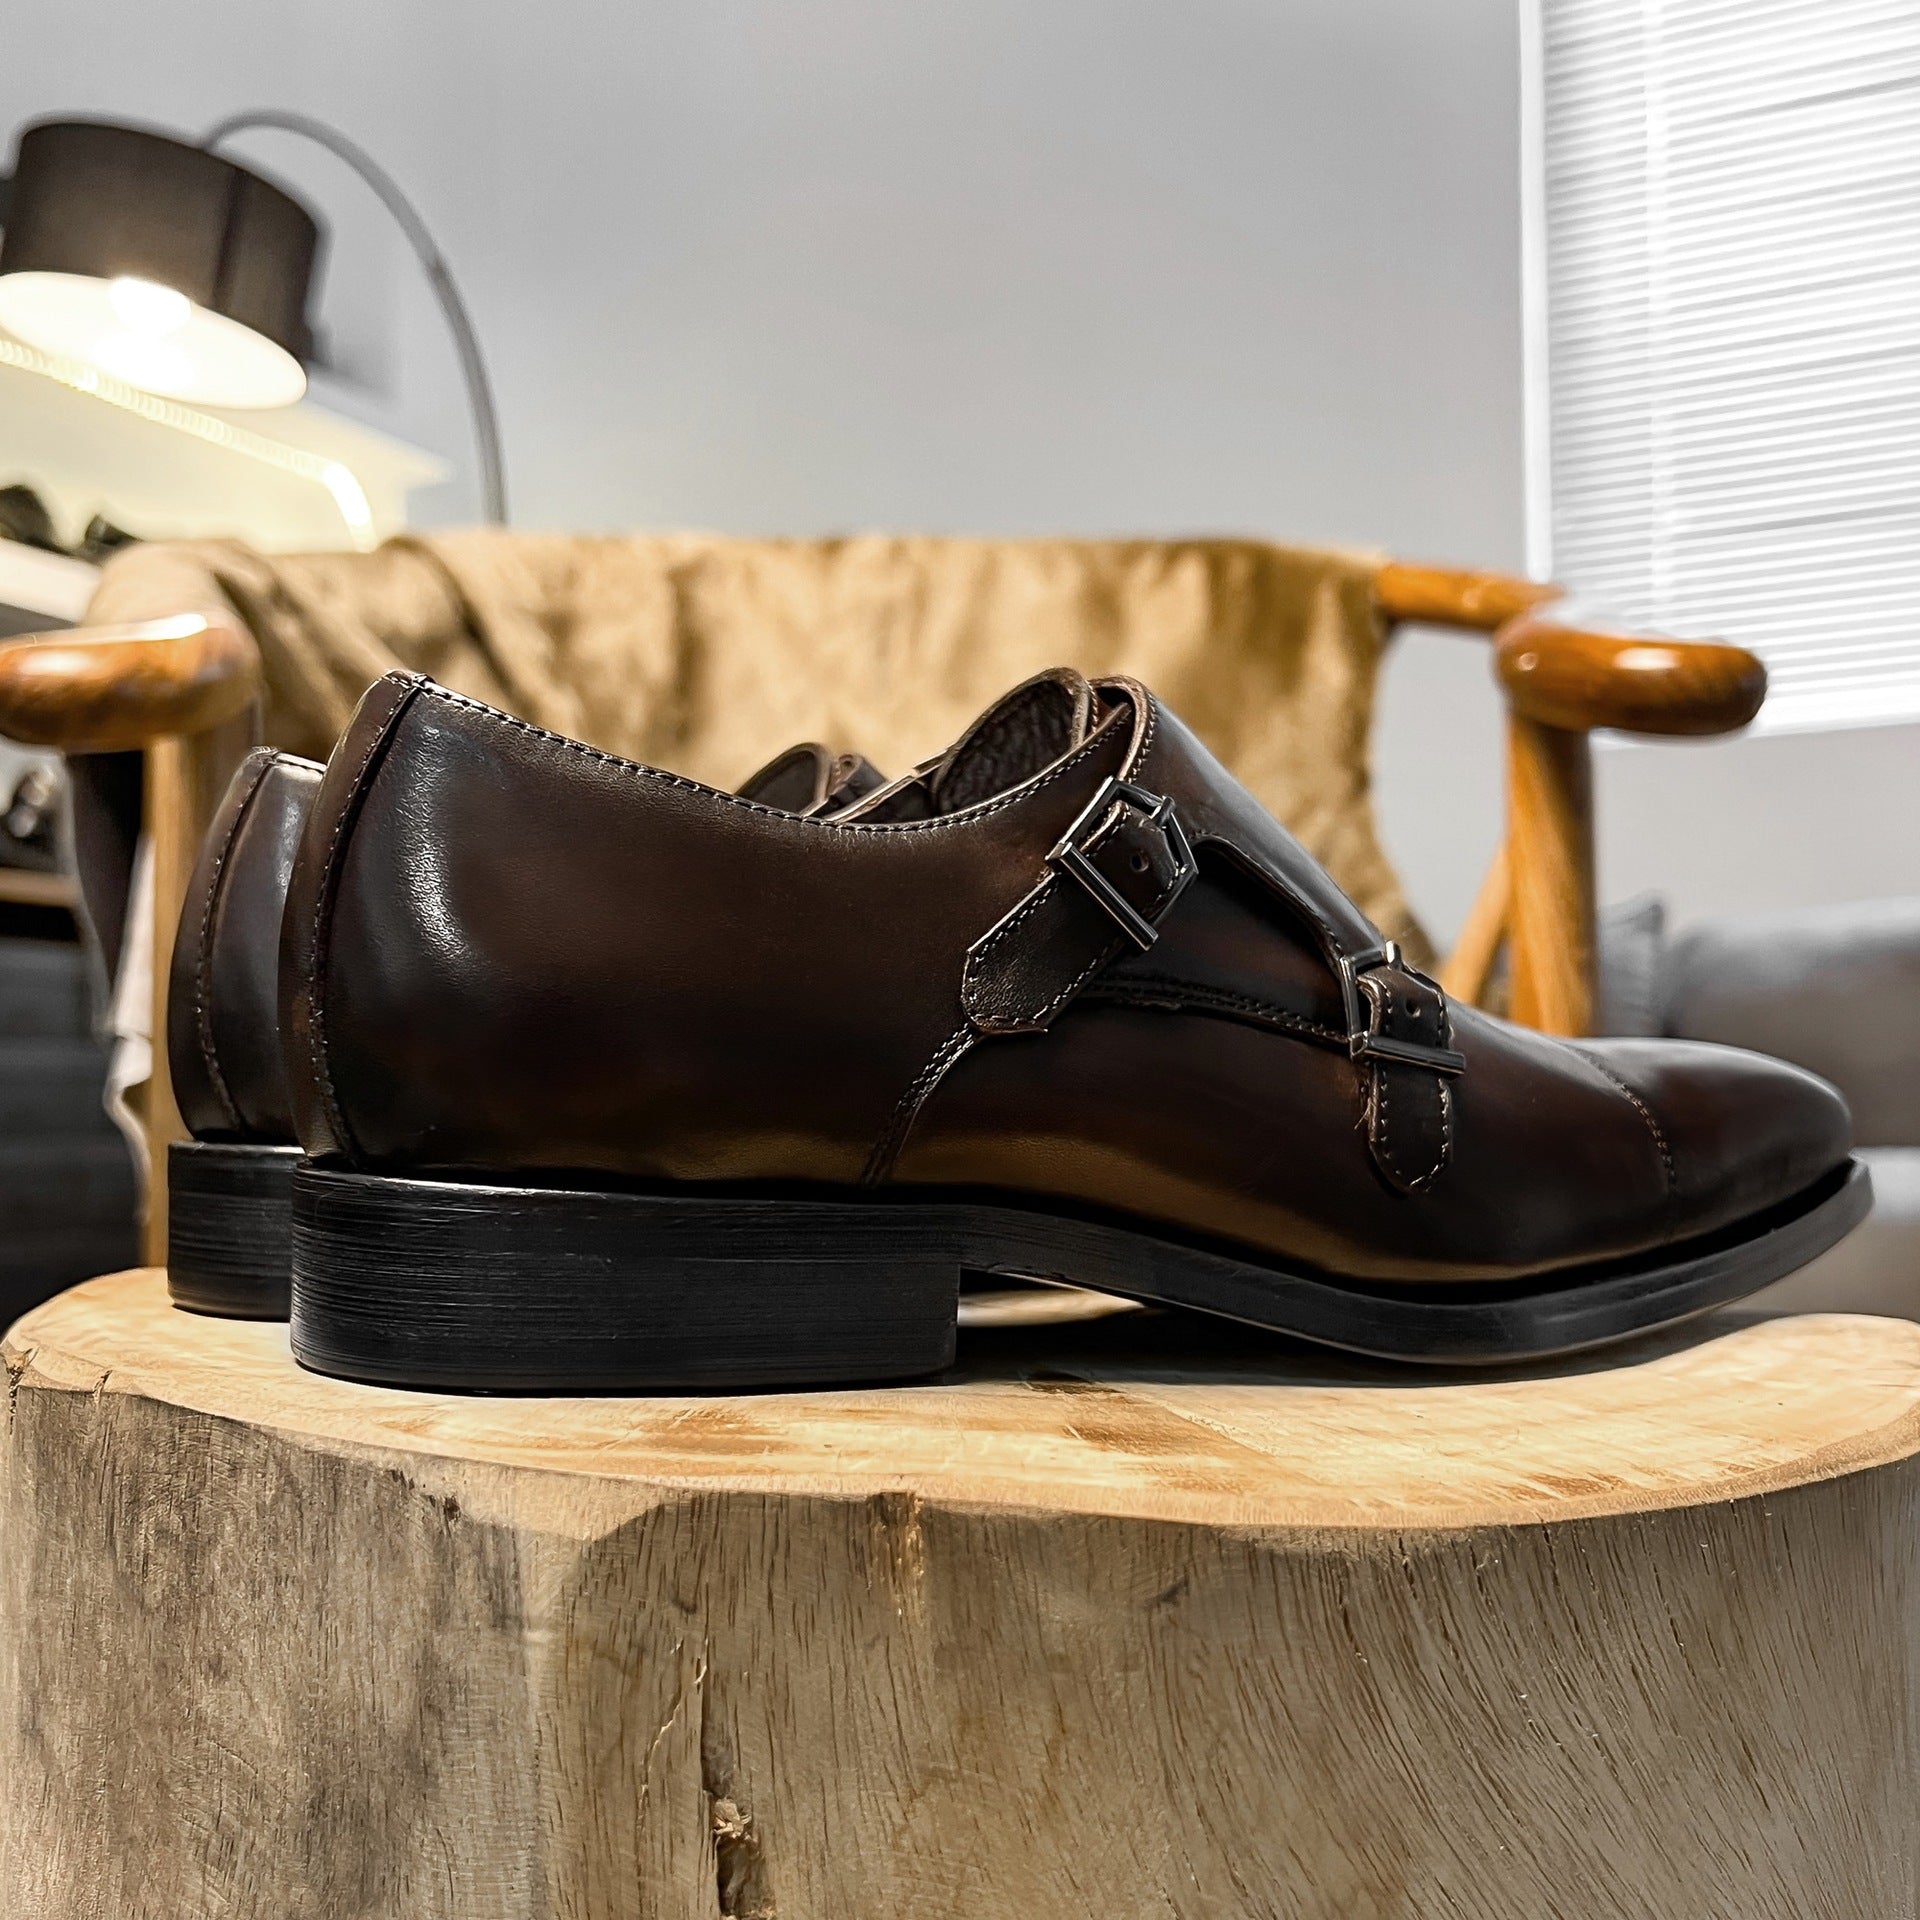 Men's Business Formal Wear Korean Cowhide Mengke Leather Shoes